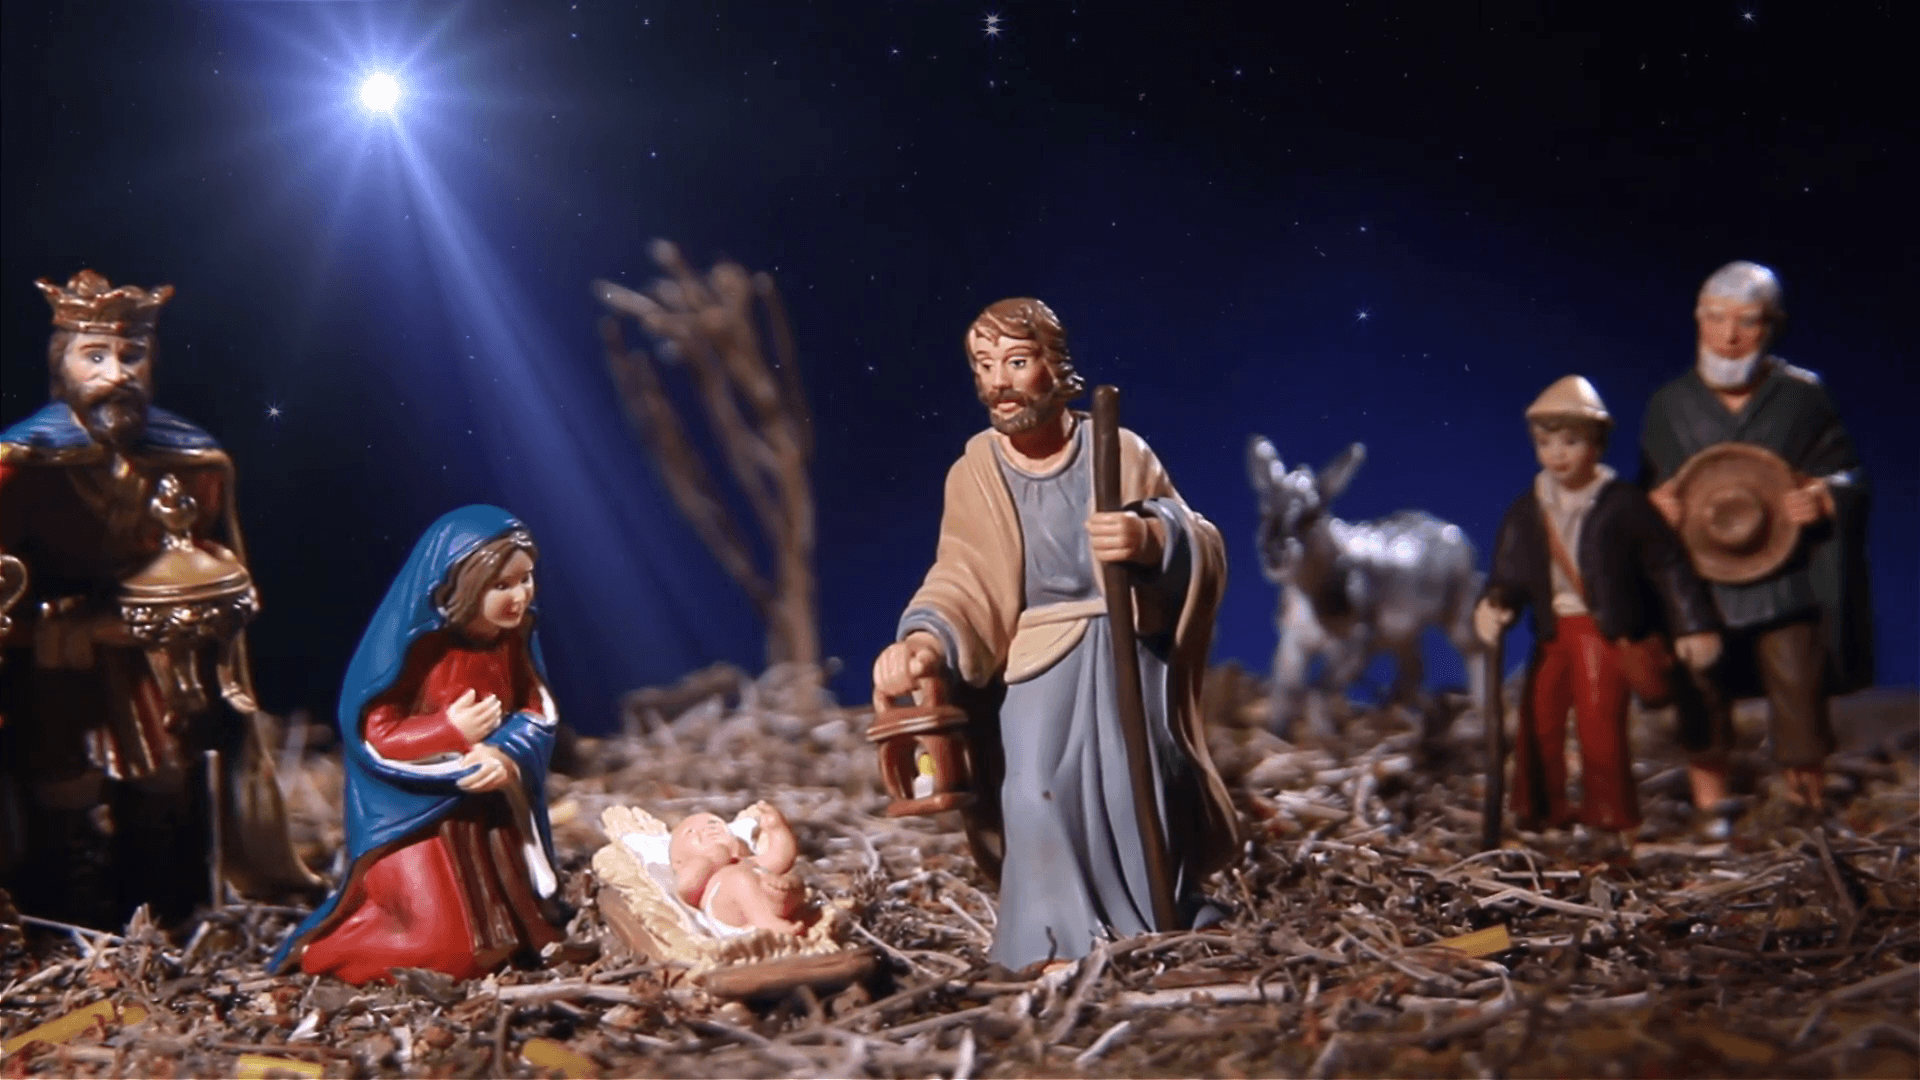 Nativity scene exhibit figures representing the infant Jesus, his